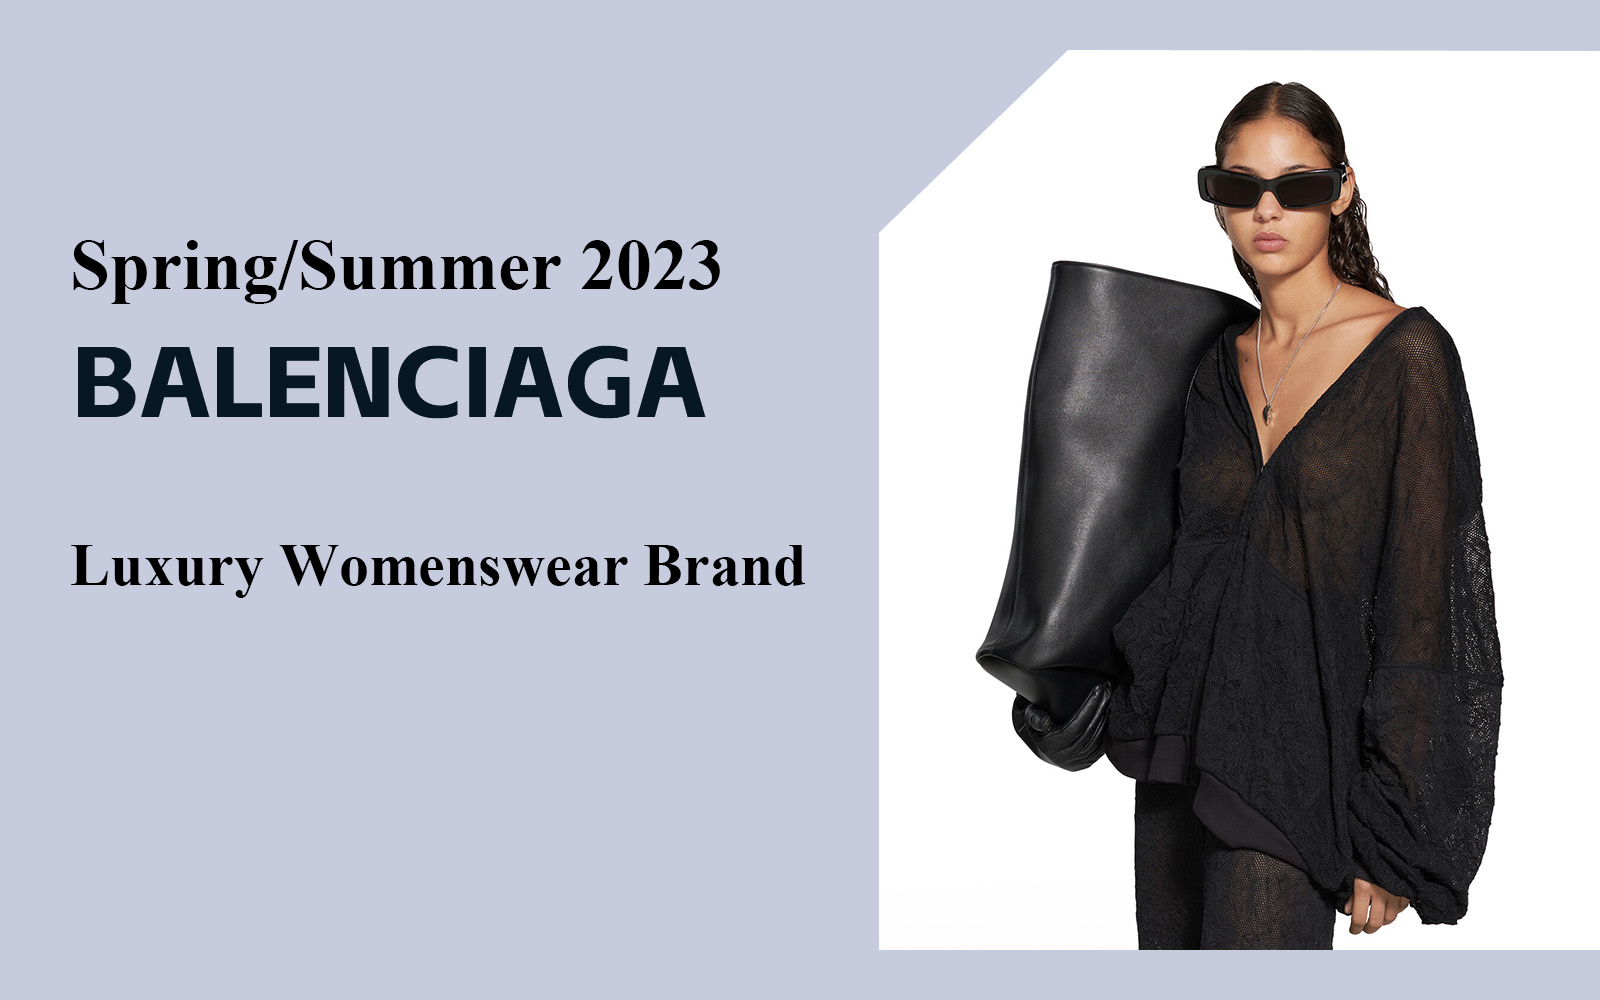 The Analysis of Balenciaga The Luxury Womenswear Brand